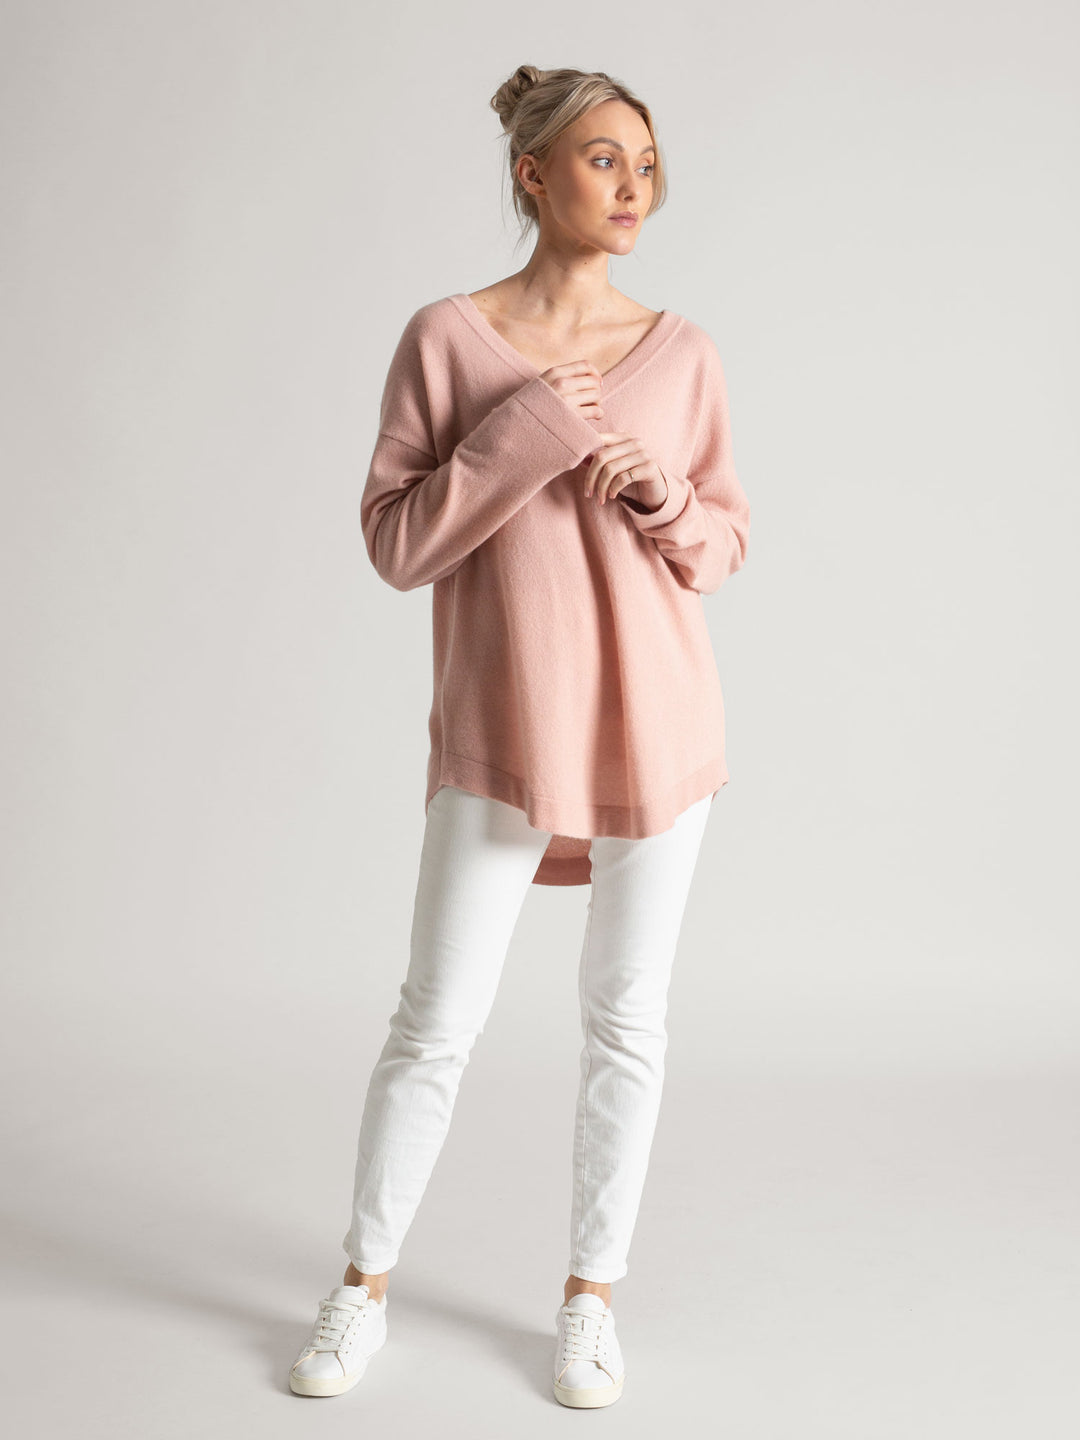 Cashmere v-neck sweater "Alva" in 100% pure cashmere. Color; rose glow. Scandinavian design by Kashmina